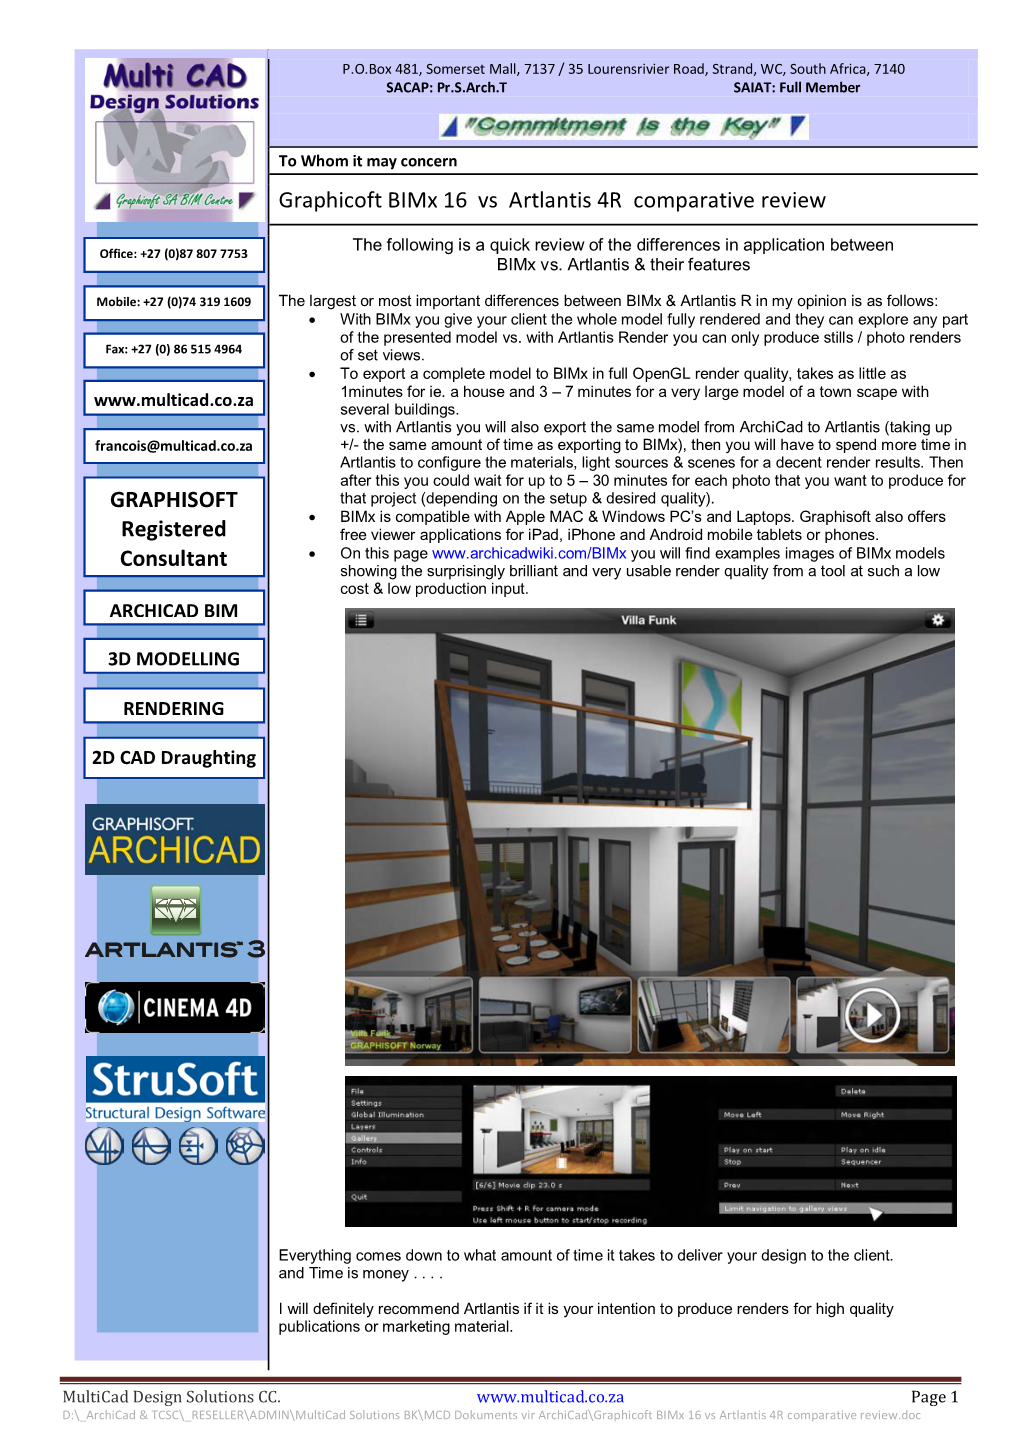 Graphicoft Bimx 16 Vs Artlantis 4R Comparative Review GRAPHISOFT